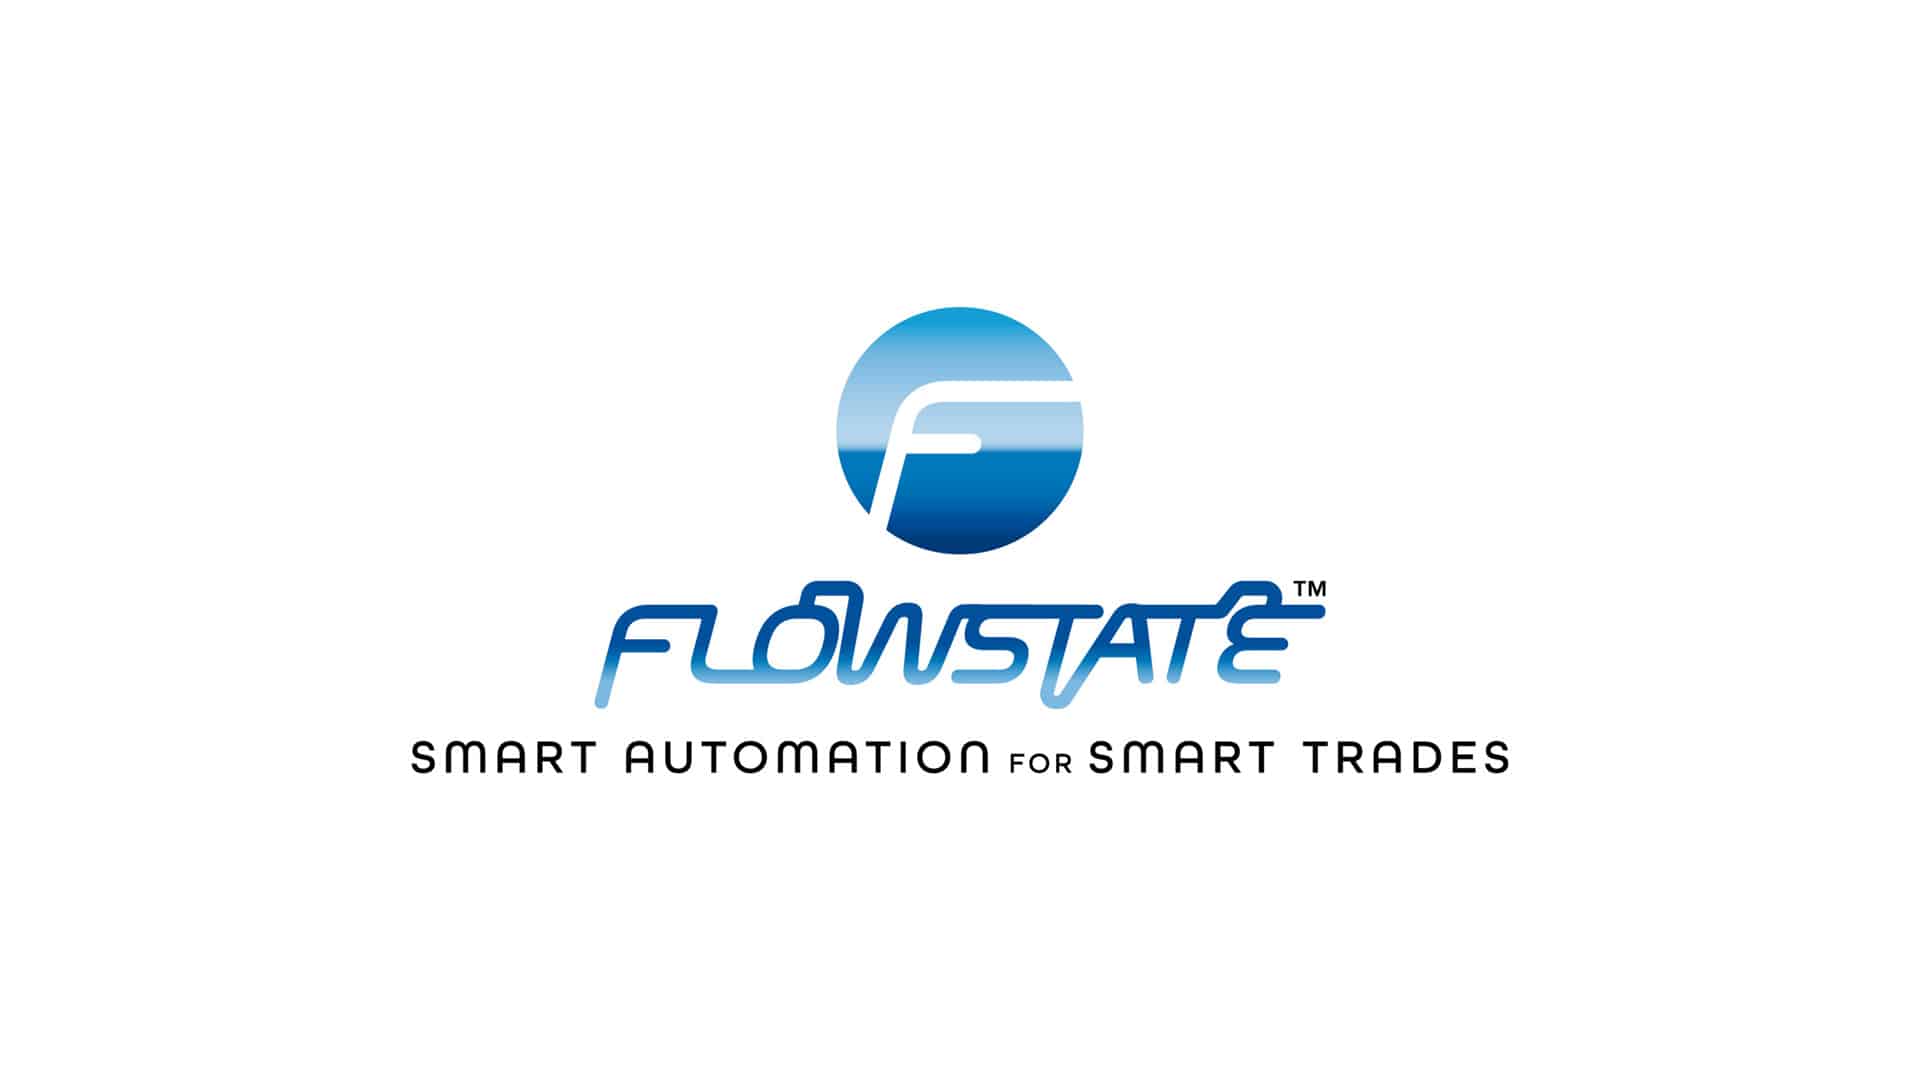 Flowstate stacked logo on white